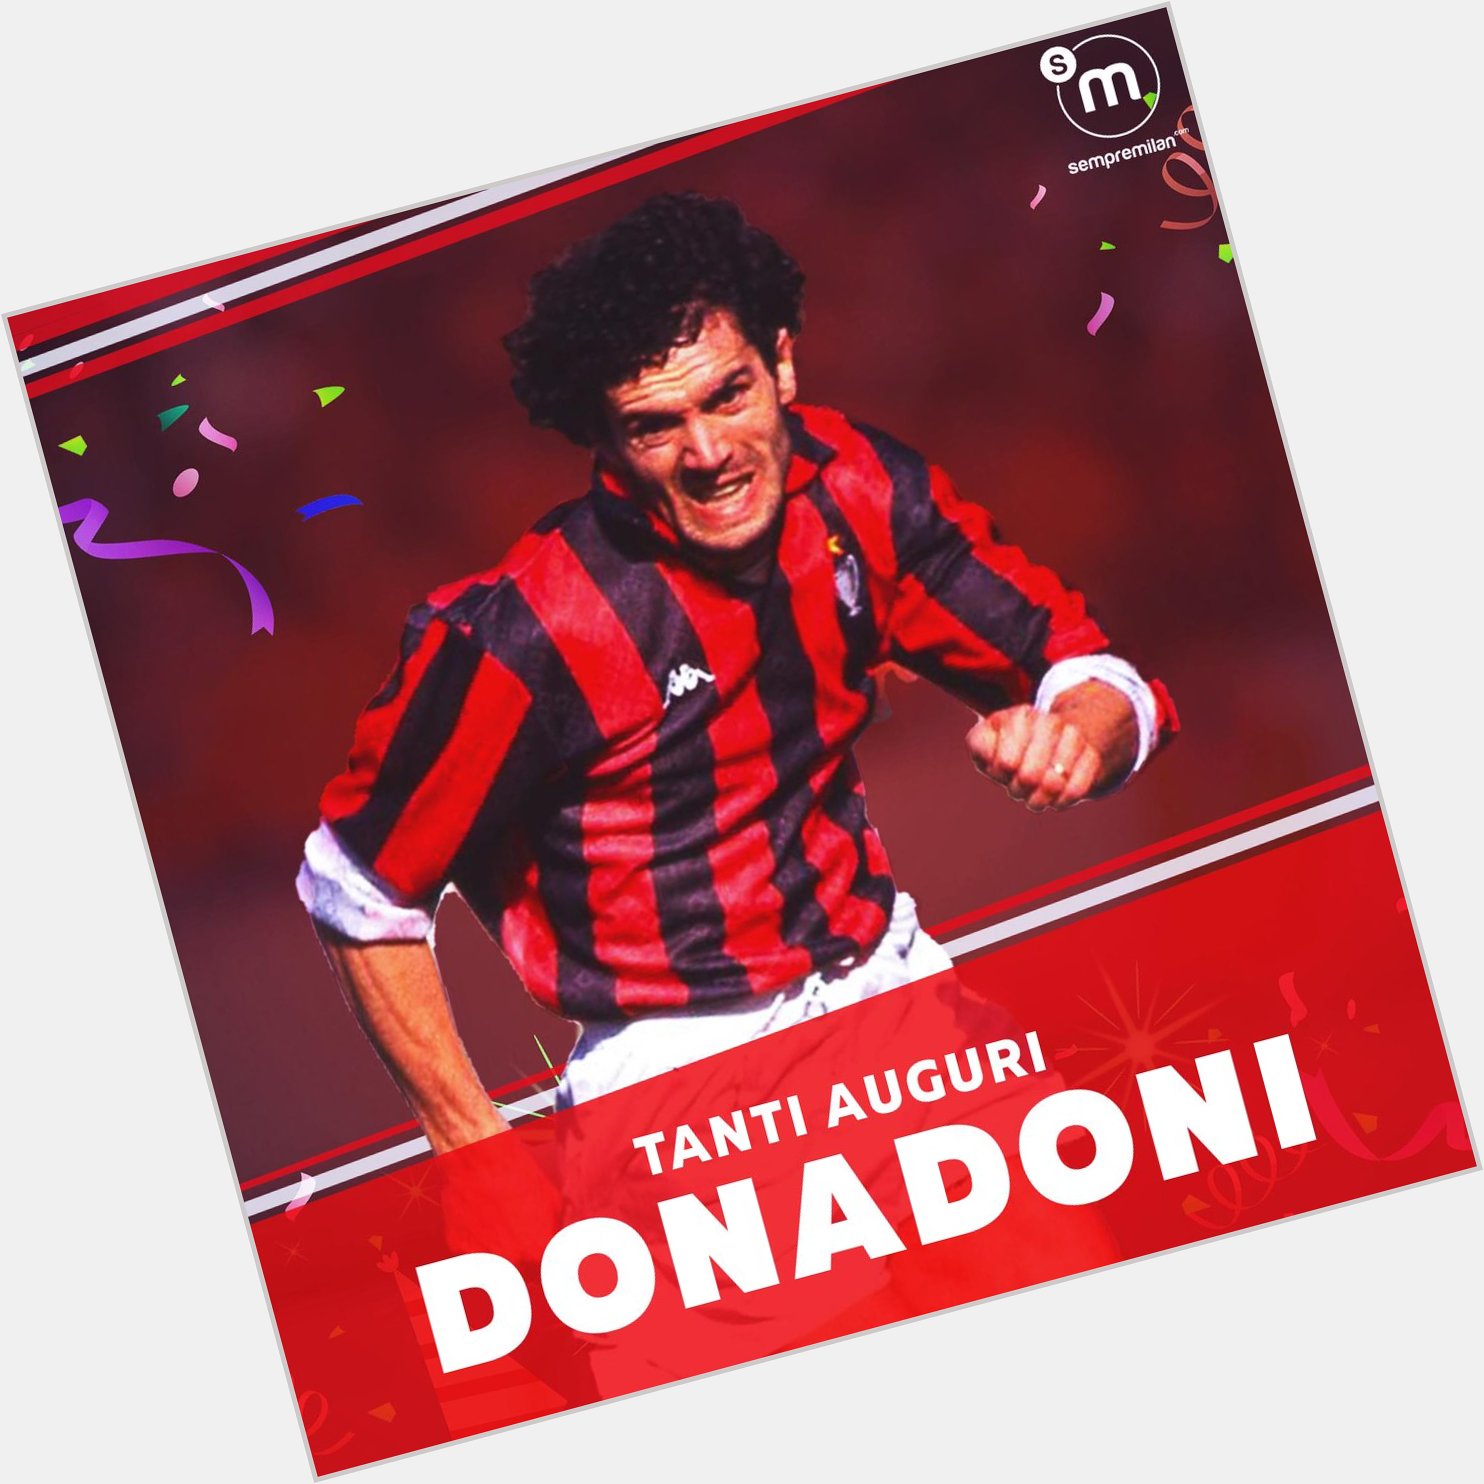  Happy birthday to Roberto Donadoni...  The former midfielder turns 56 today!     